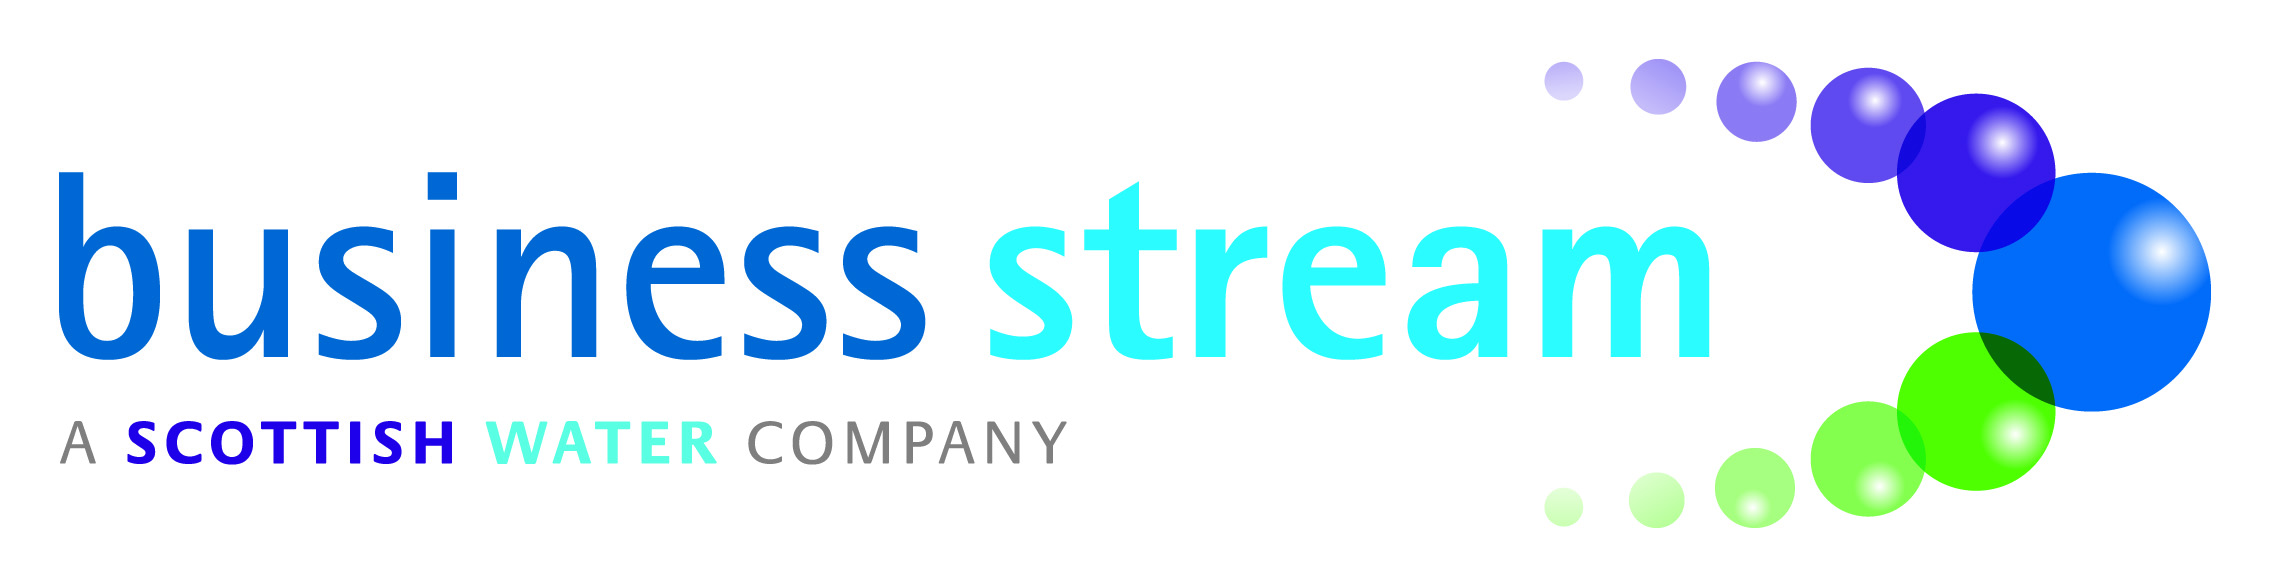 https://rocsavings.com/wp-content/uploads/2021/11/business-stream-logo.jpg